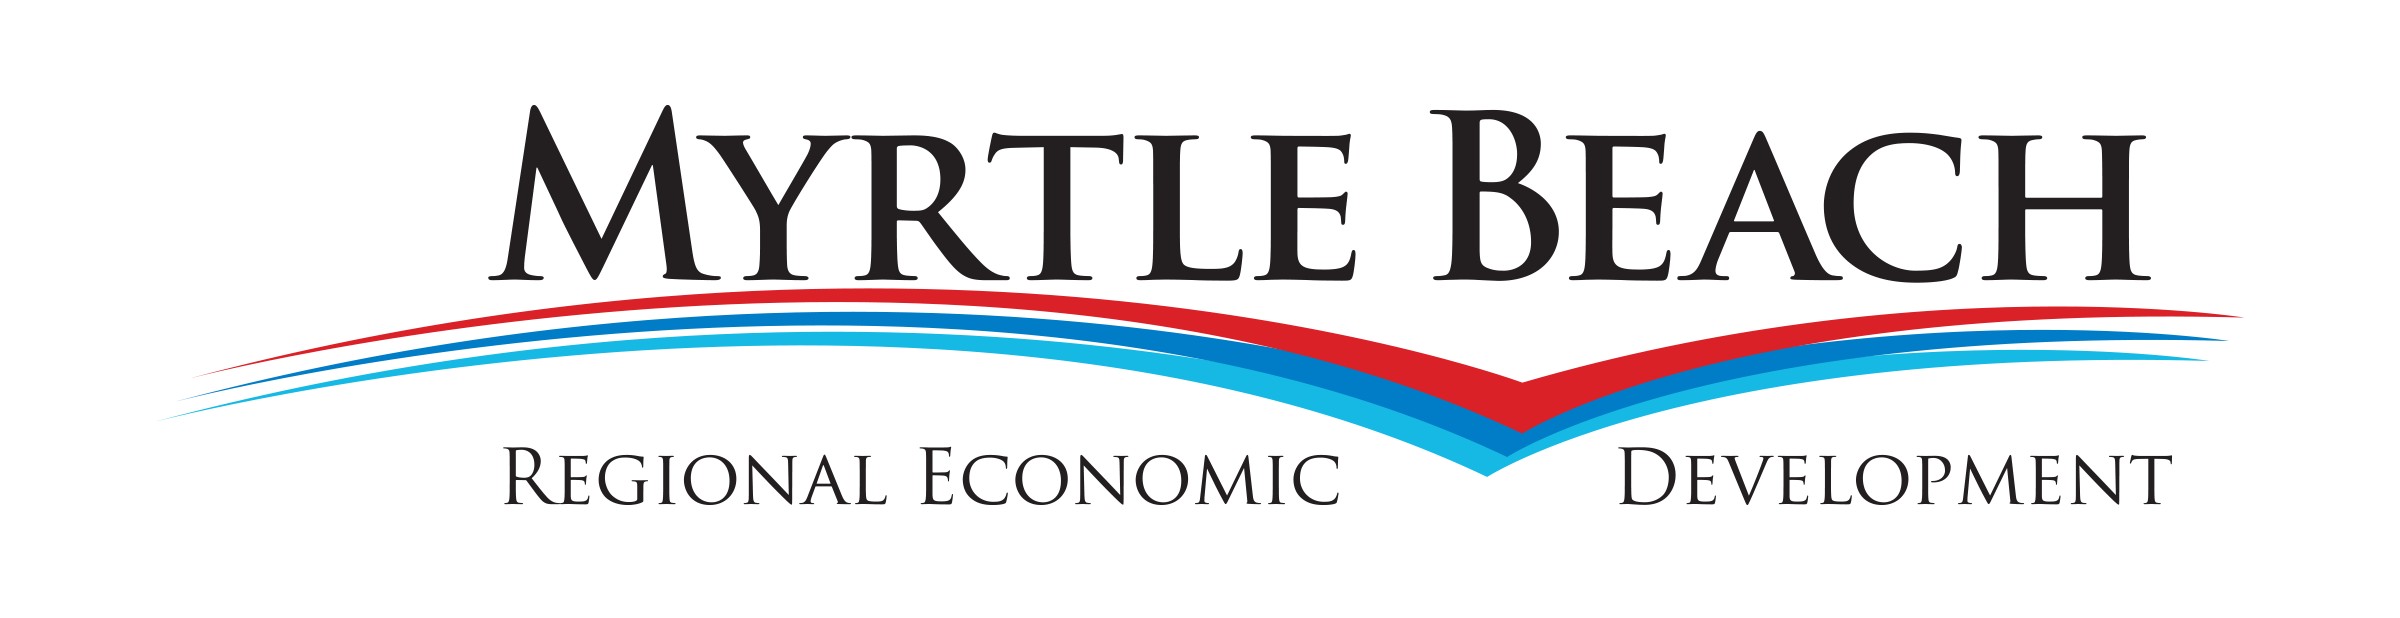 Myrtle Beach Regional Economic Development